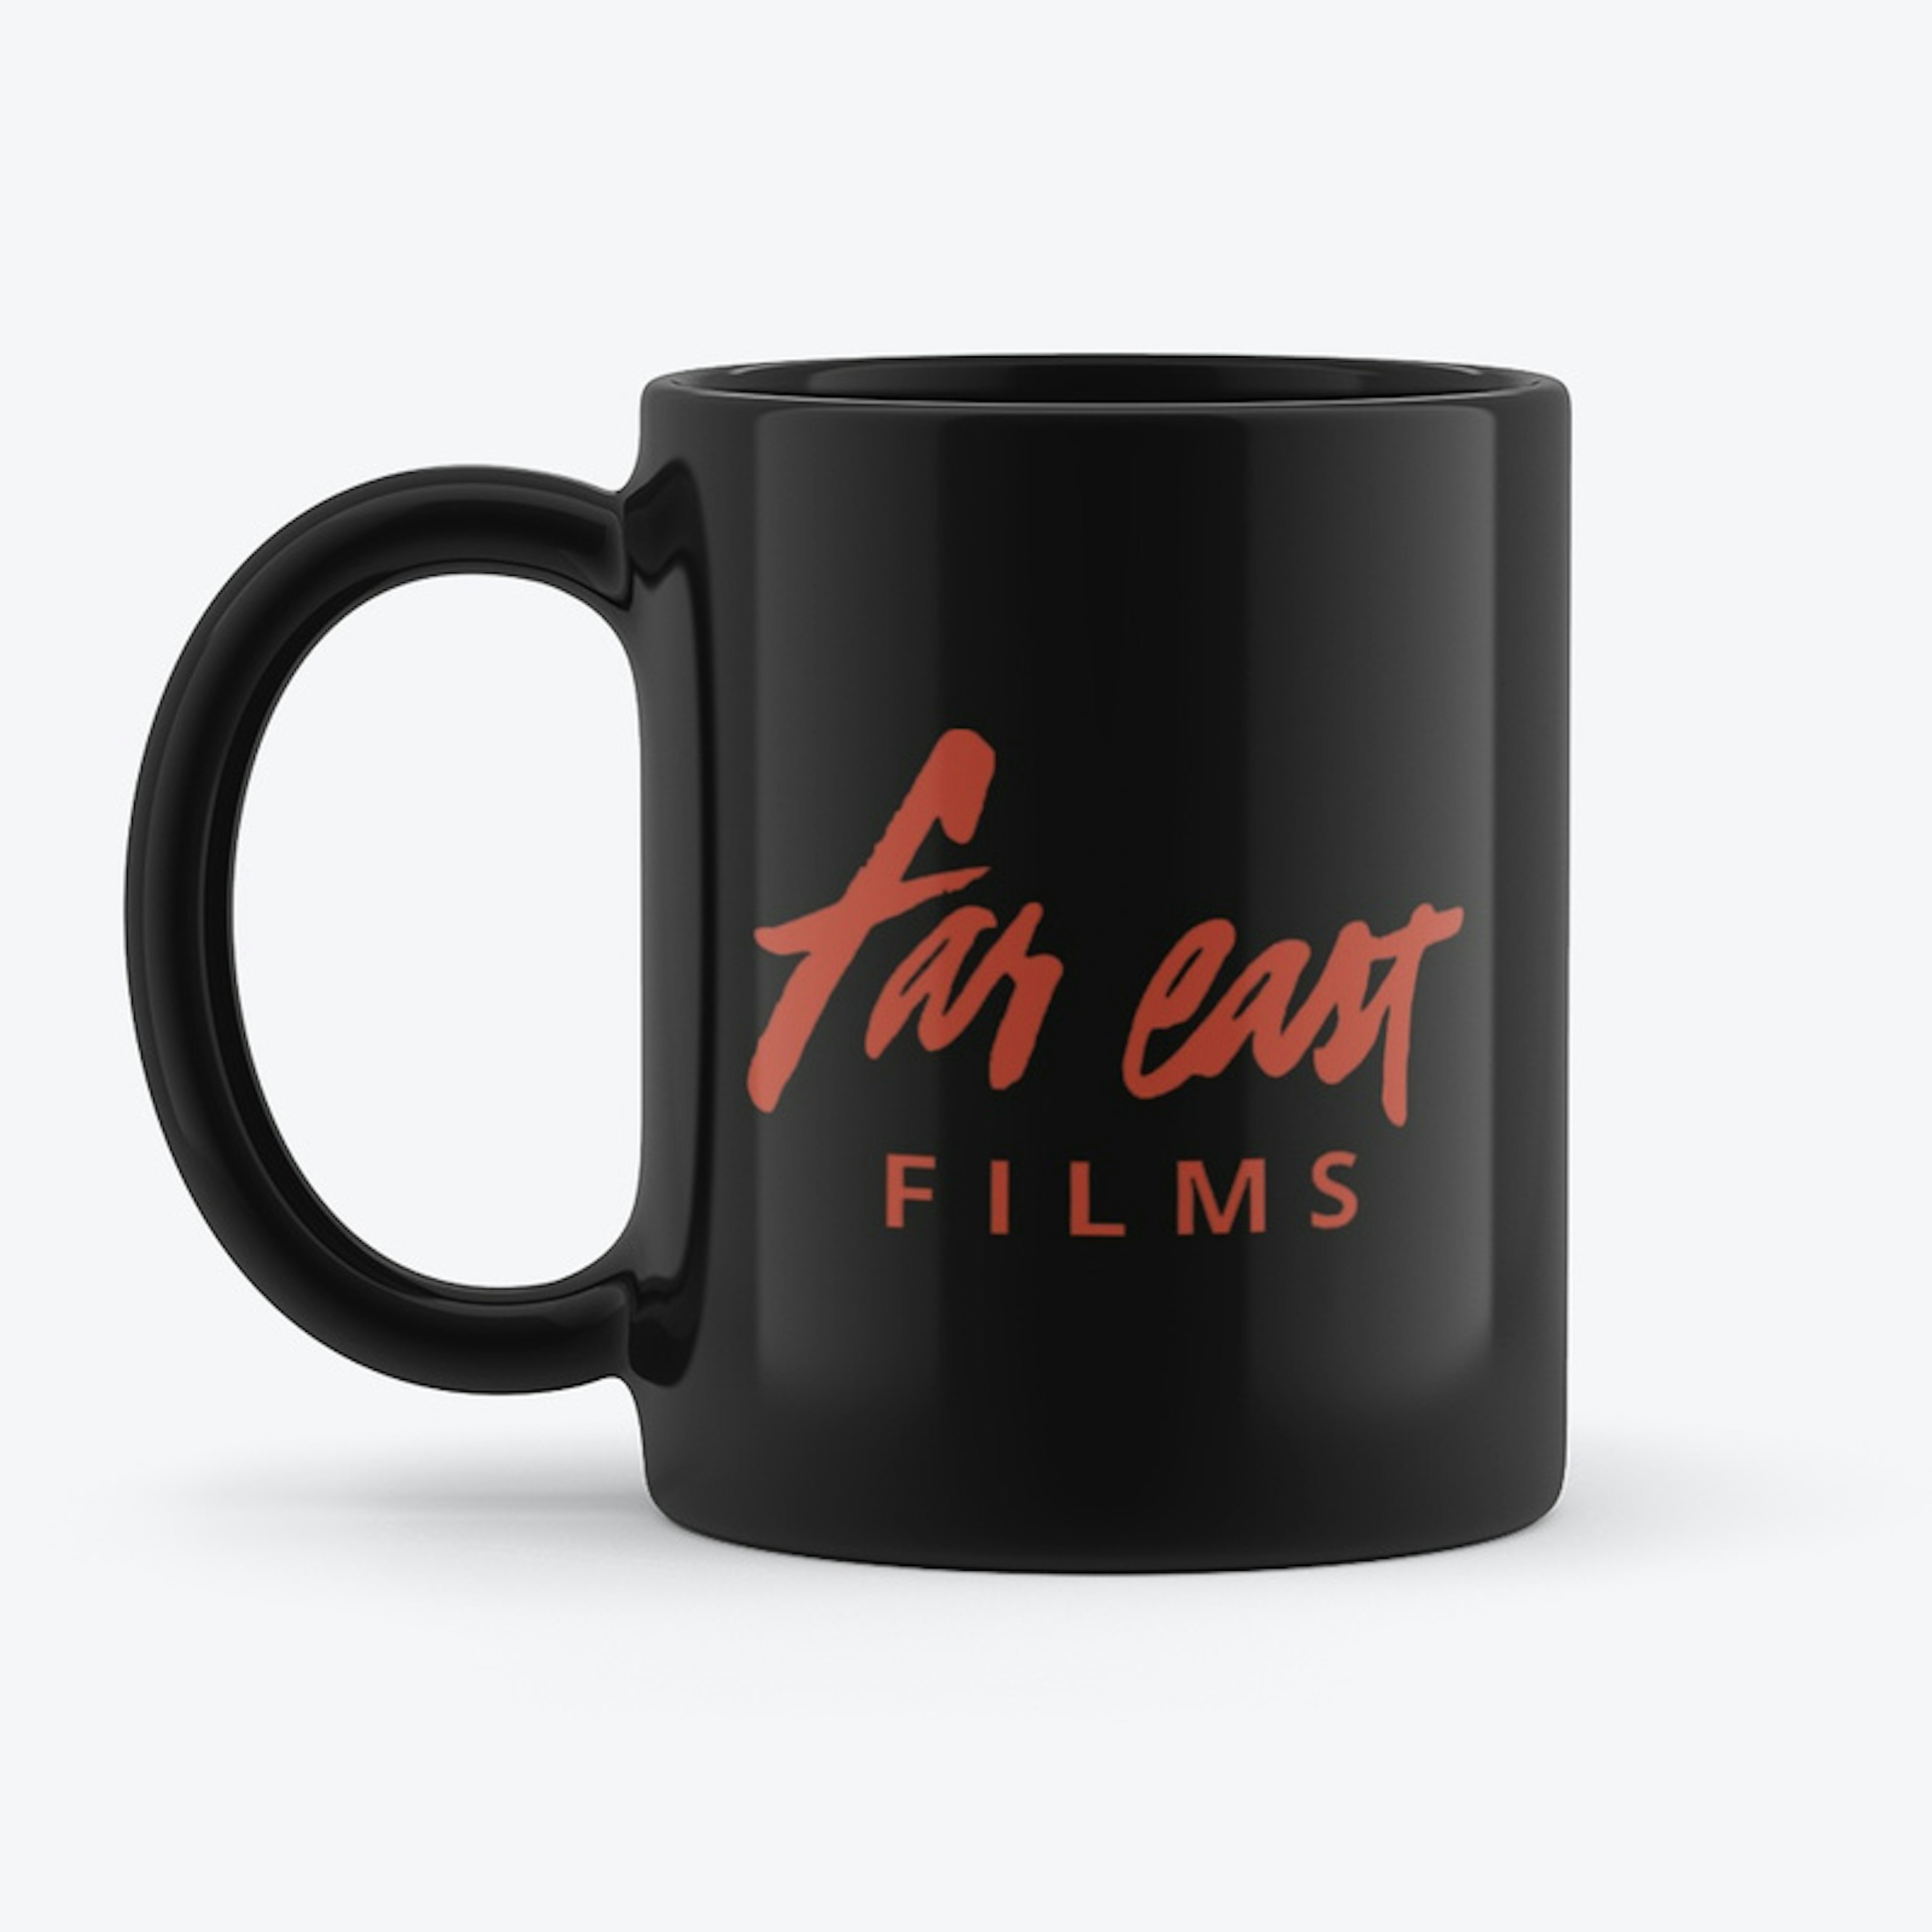 Far East Films mug (Black)